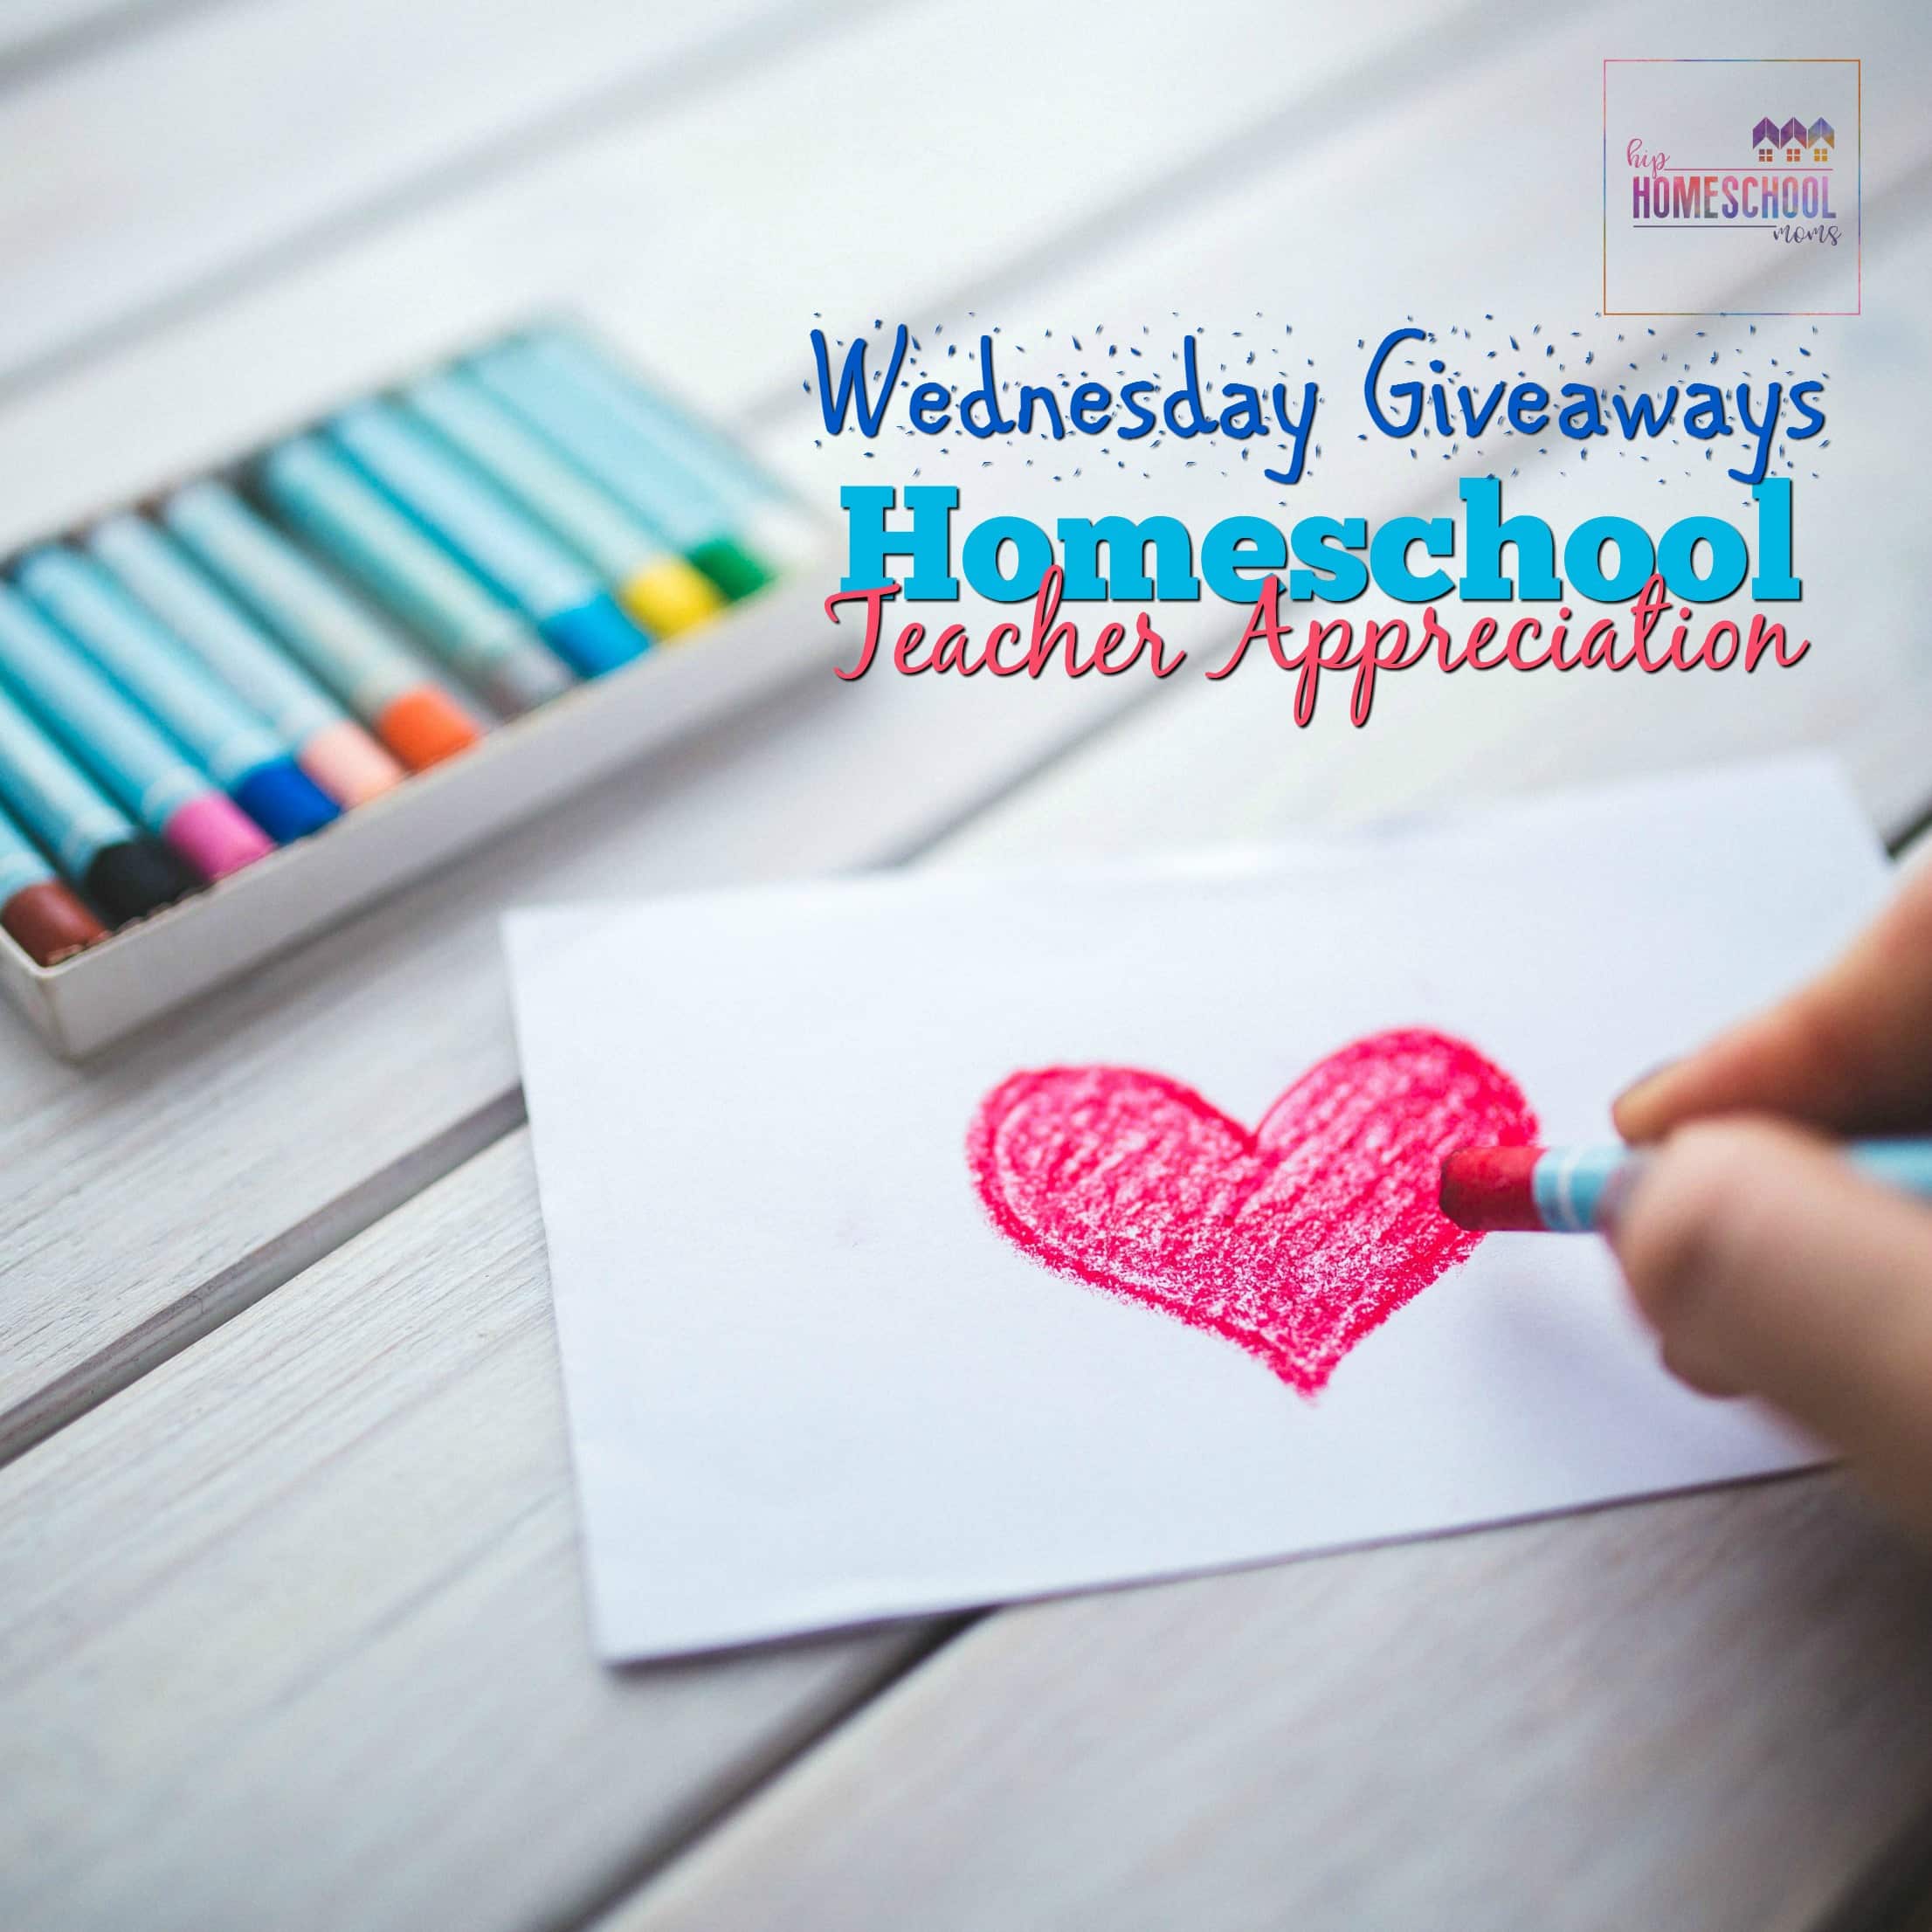 2017 Homeschool Teacher Appreciation Wednesday Giveaways